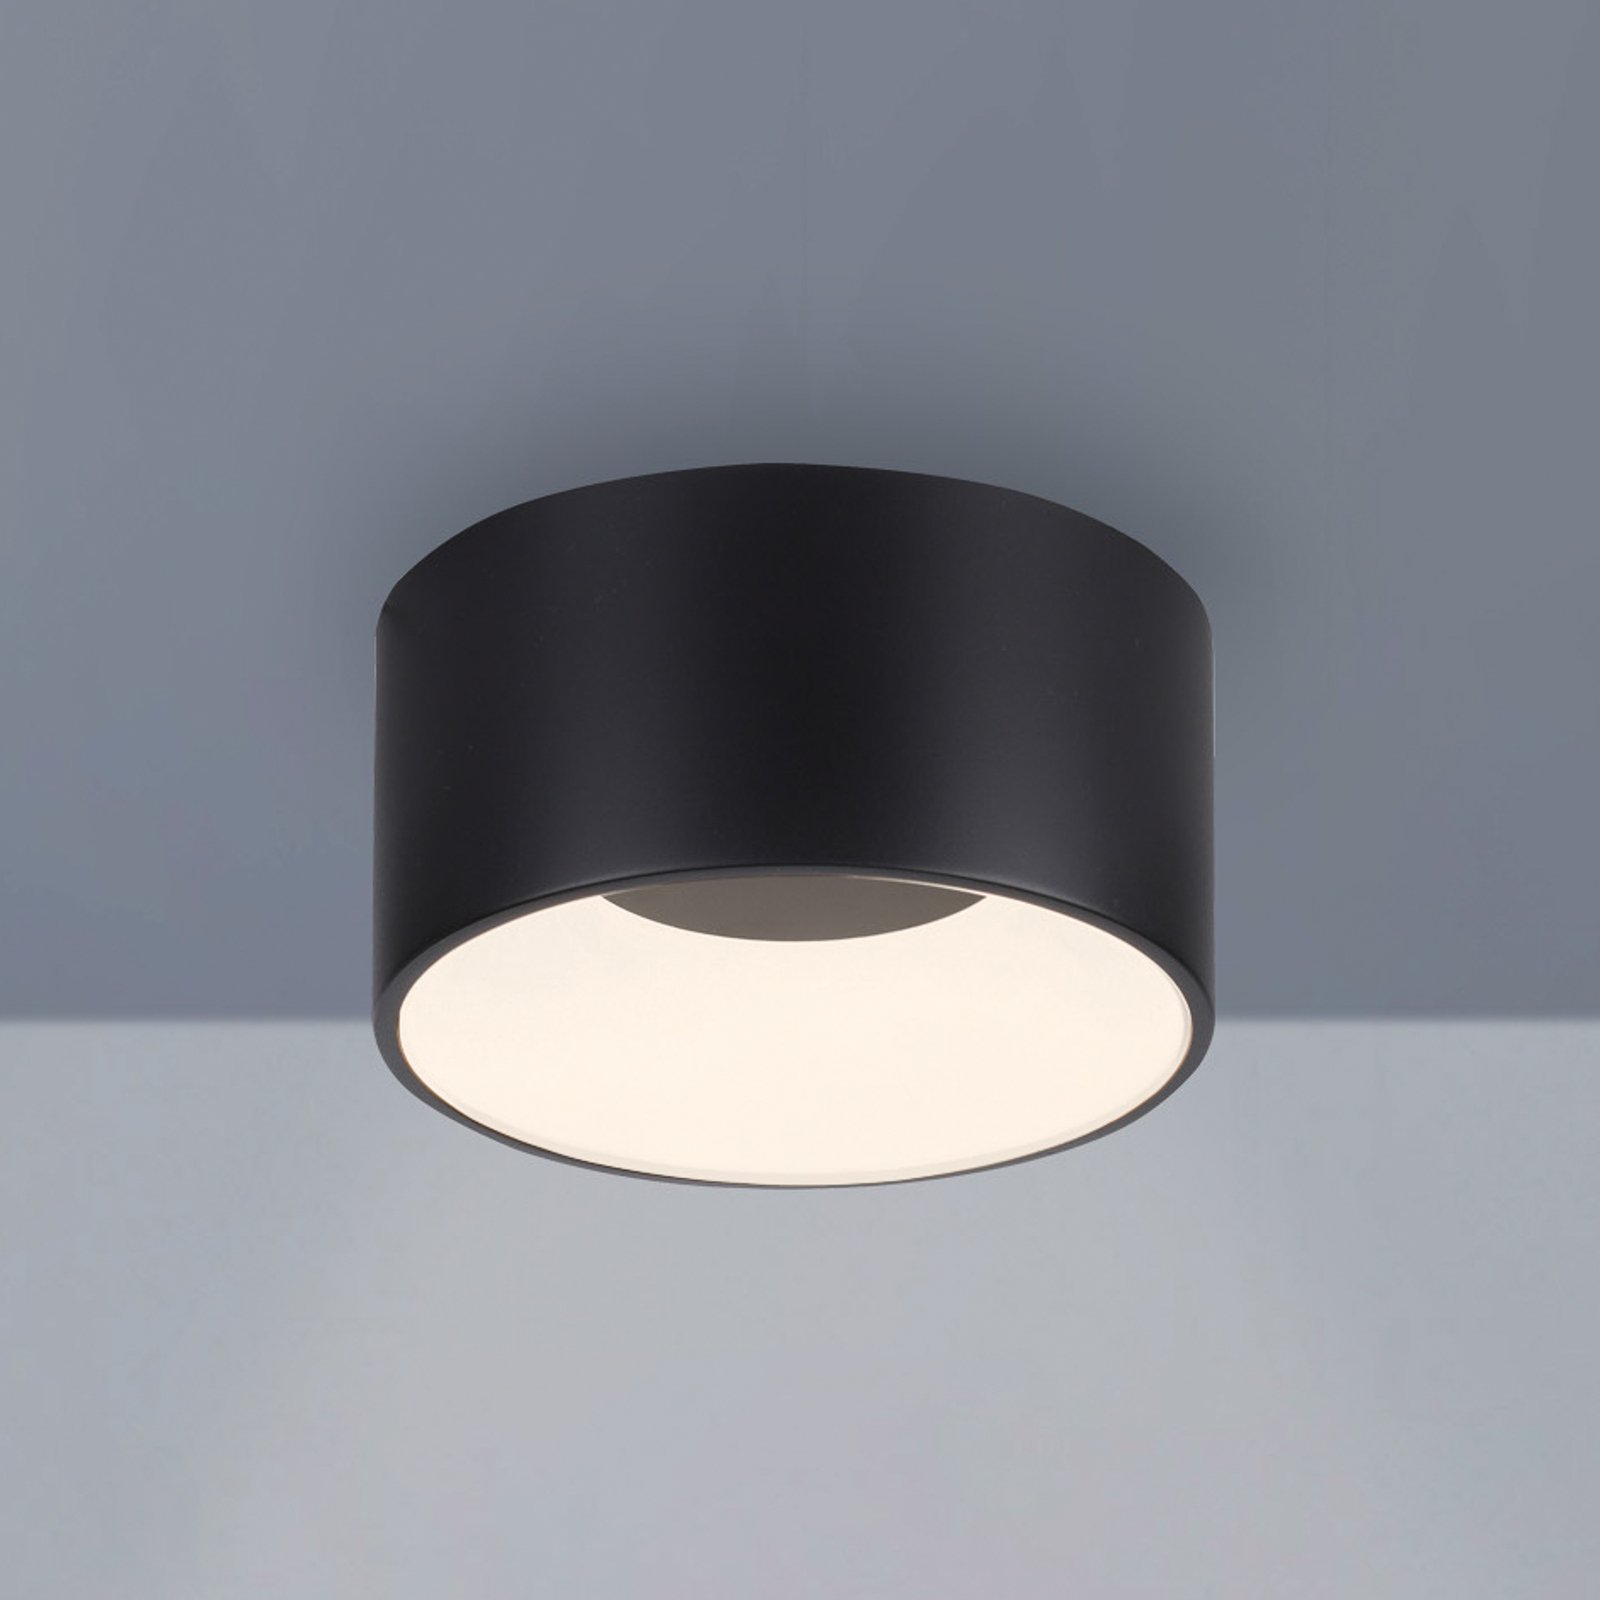 JUST LIGHT. LED ceiling light Tanika black, Ø16cm, dimmable